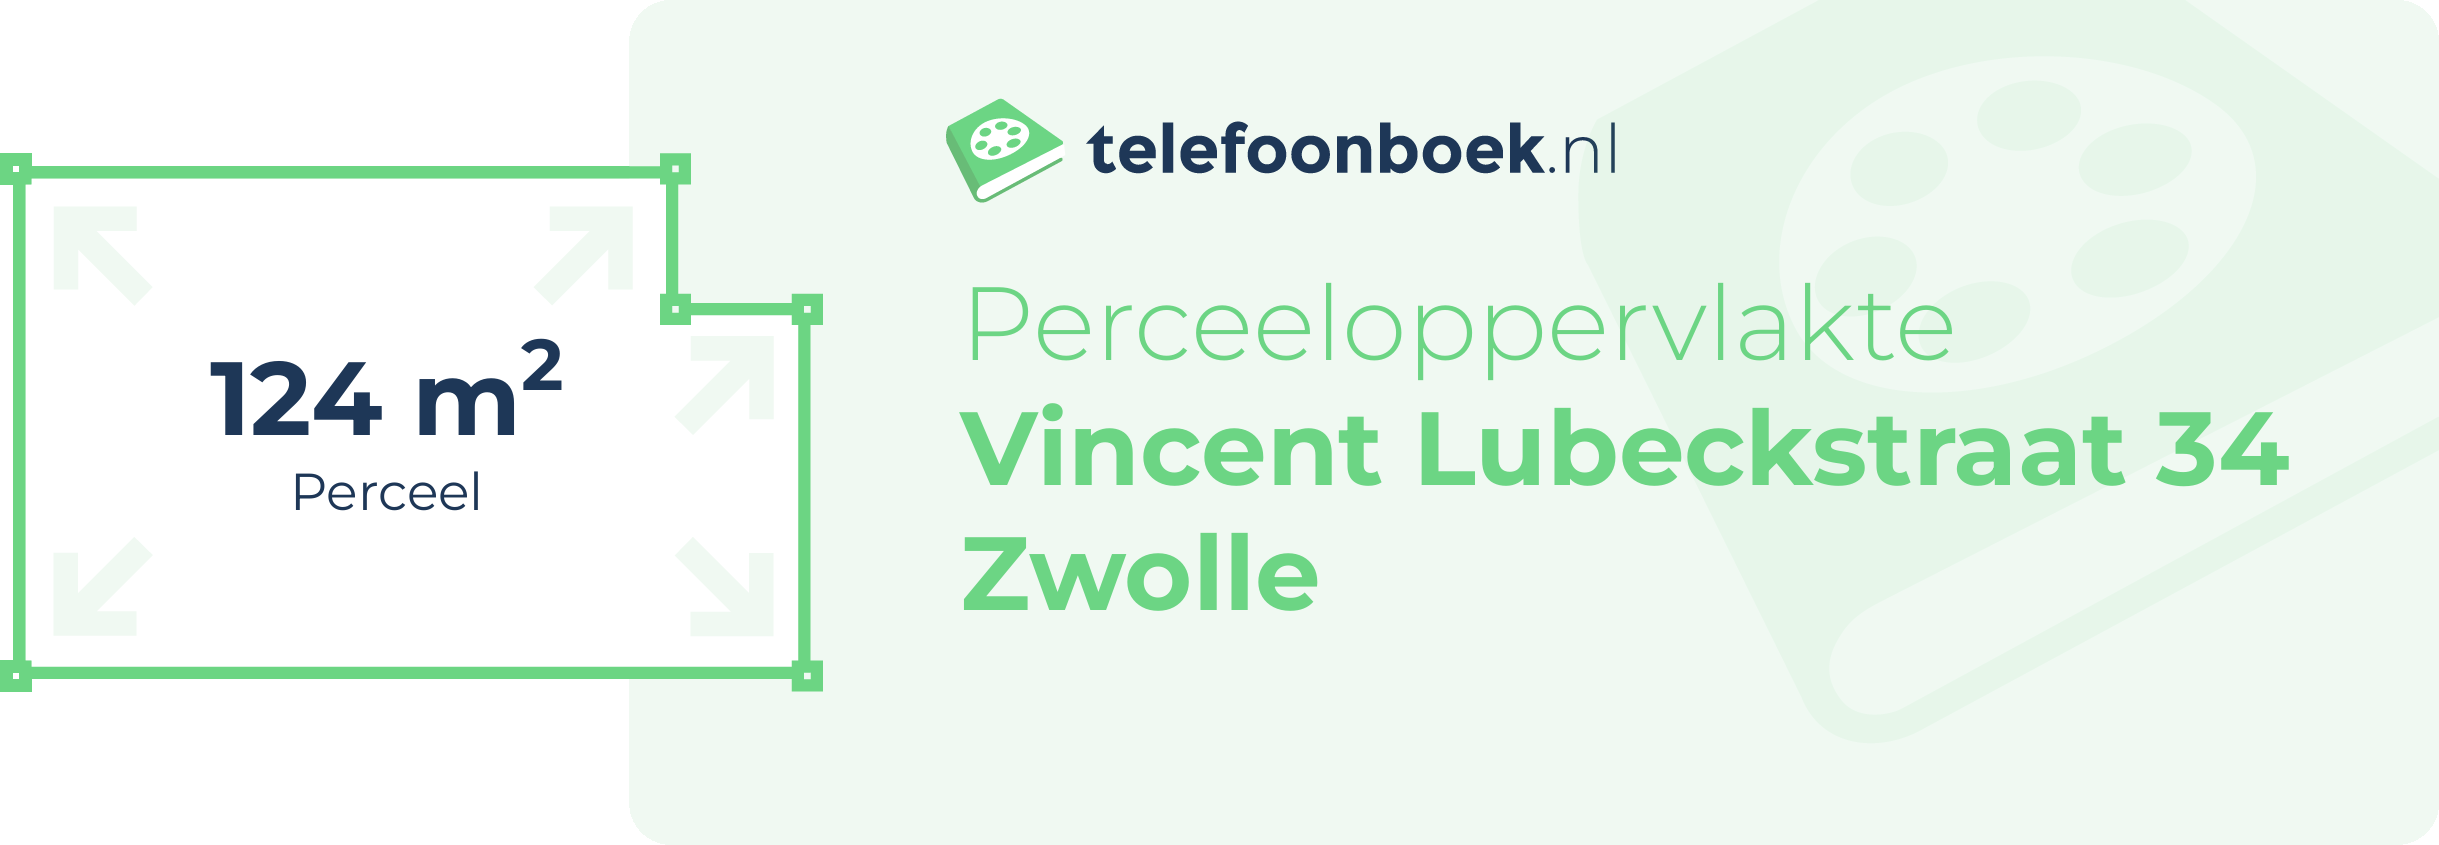 Perceeloppervlakte Vincent Lubeckstraat 34 Zwolle